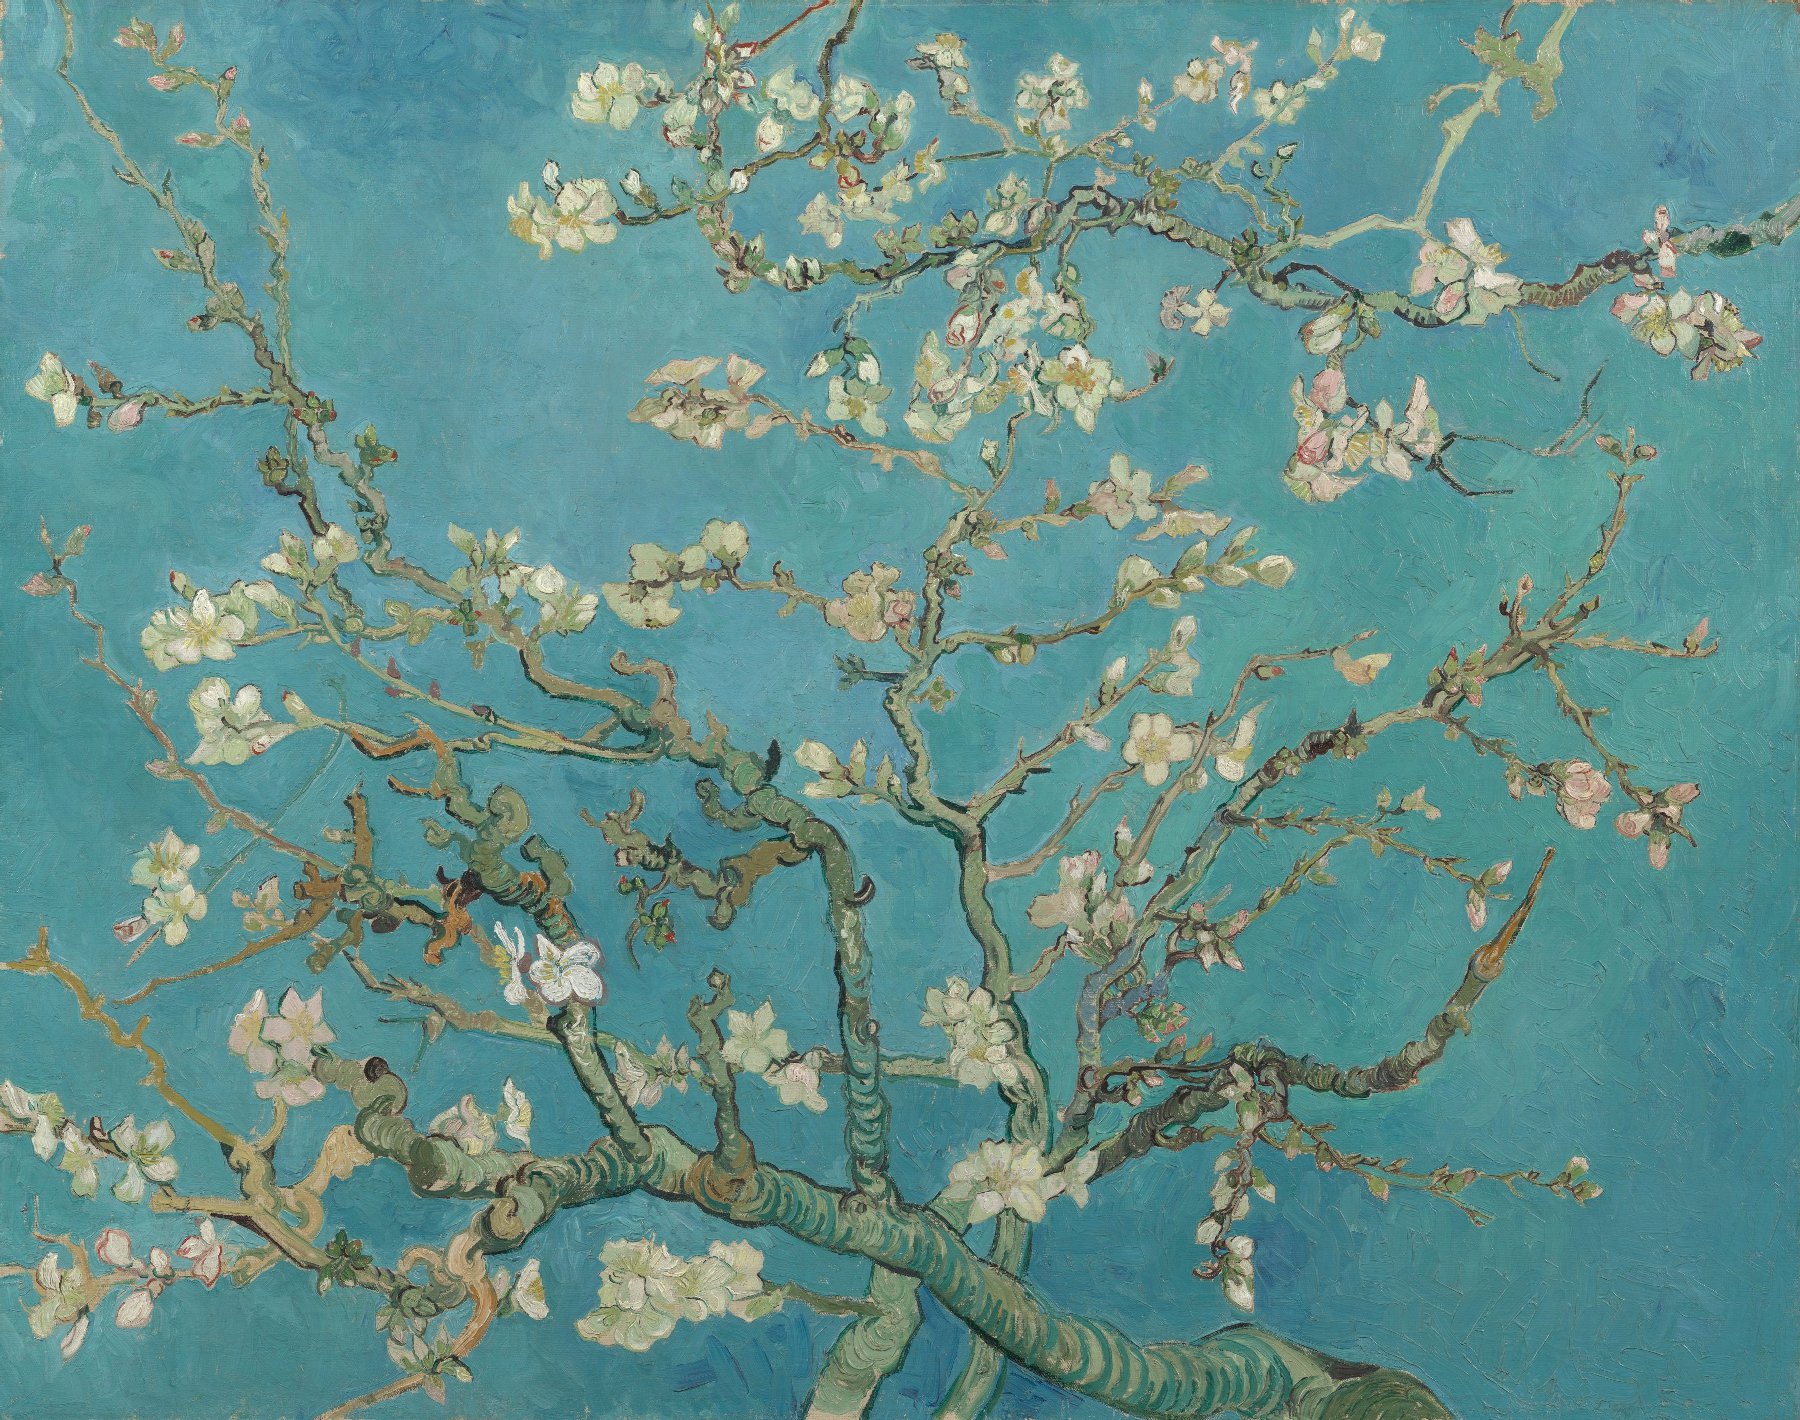 Amandelbloesem Vincent van Gogh (1853 - 1890), Saint-Rémy-de-Provence, februari 1890